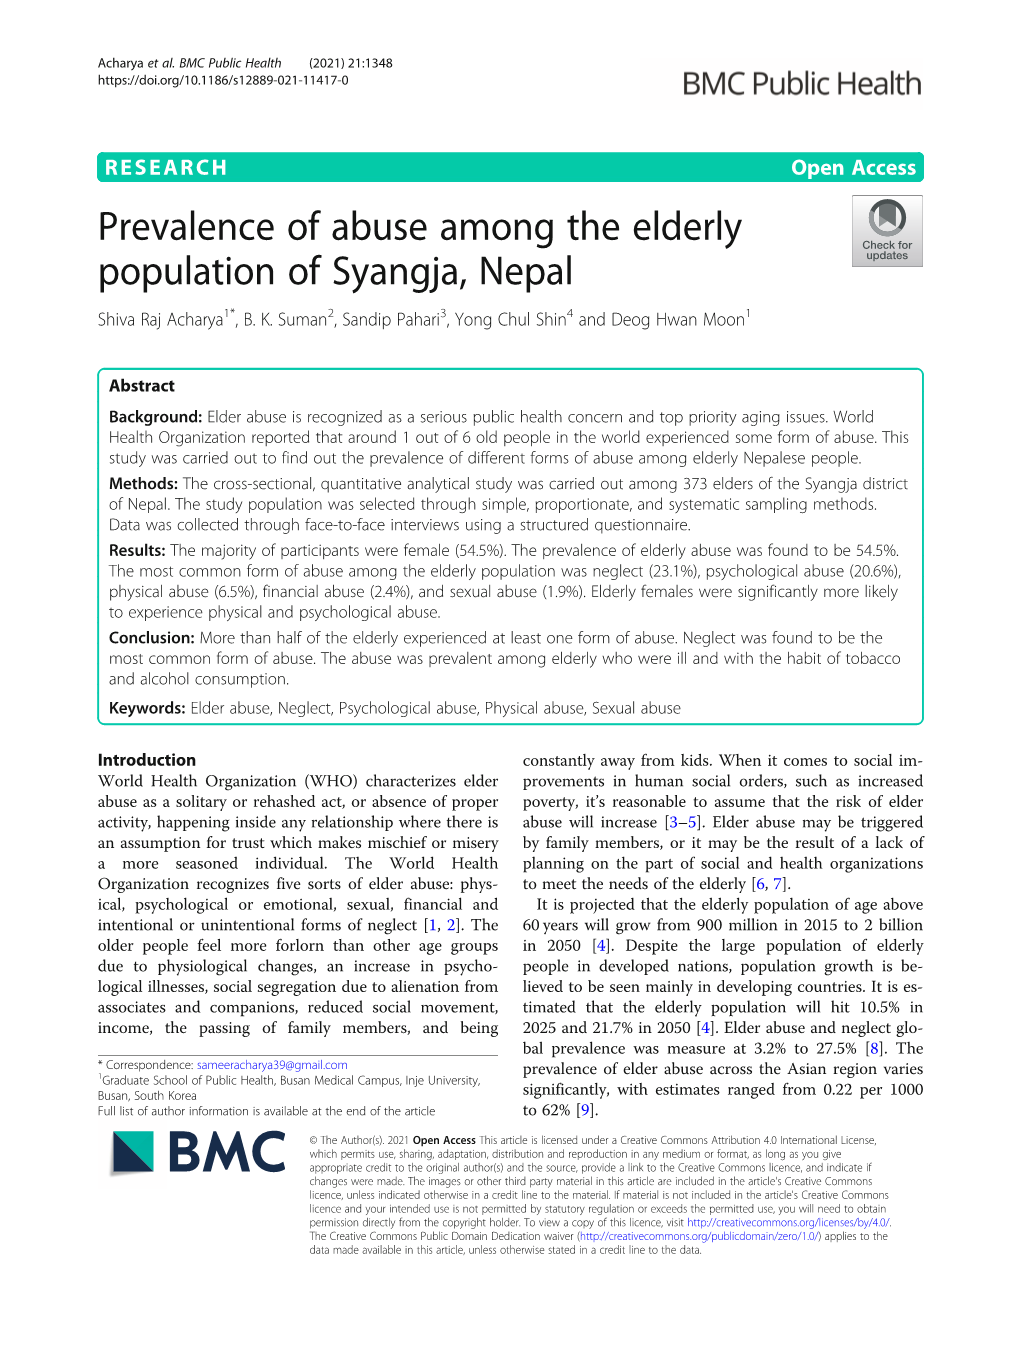 Prevalence of Abuse Among the Elderly Population of Syangja, Nepal Shiva Raj Acharya1*, B